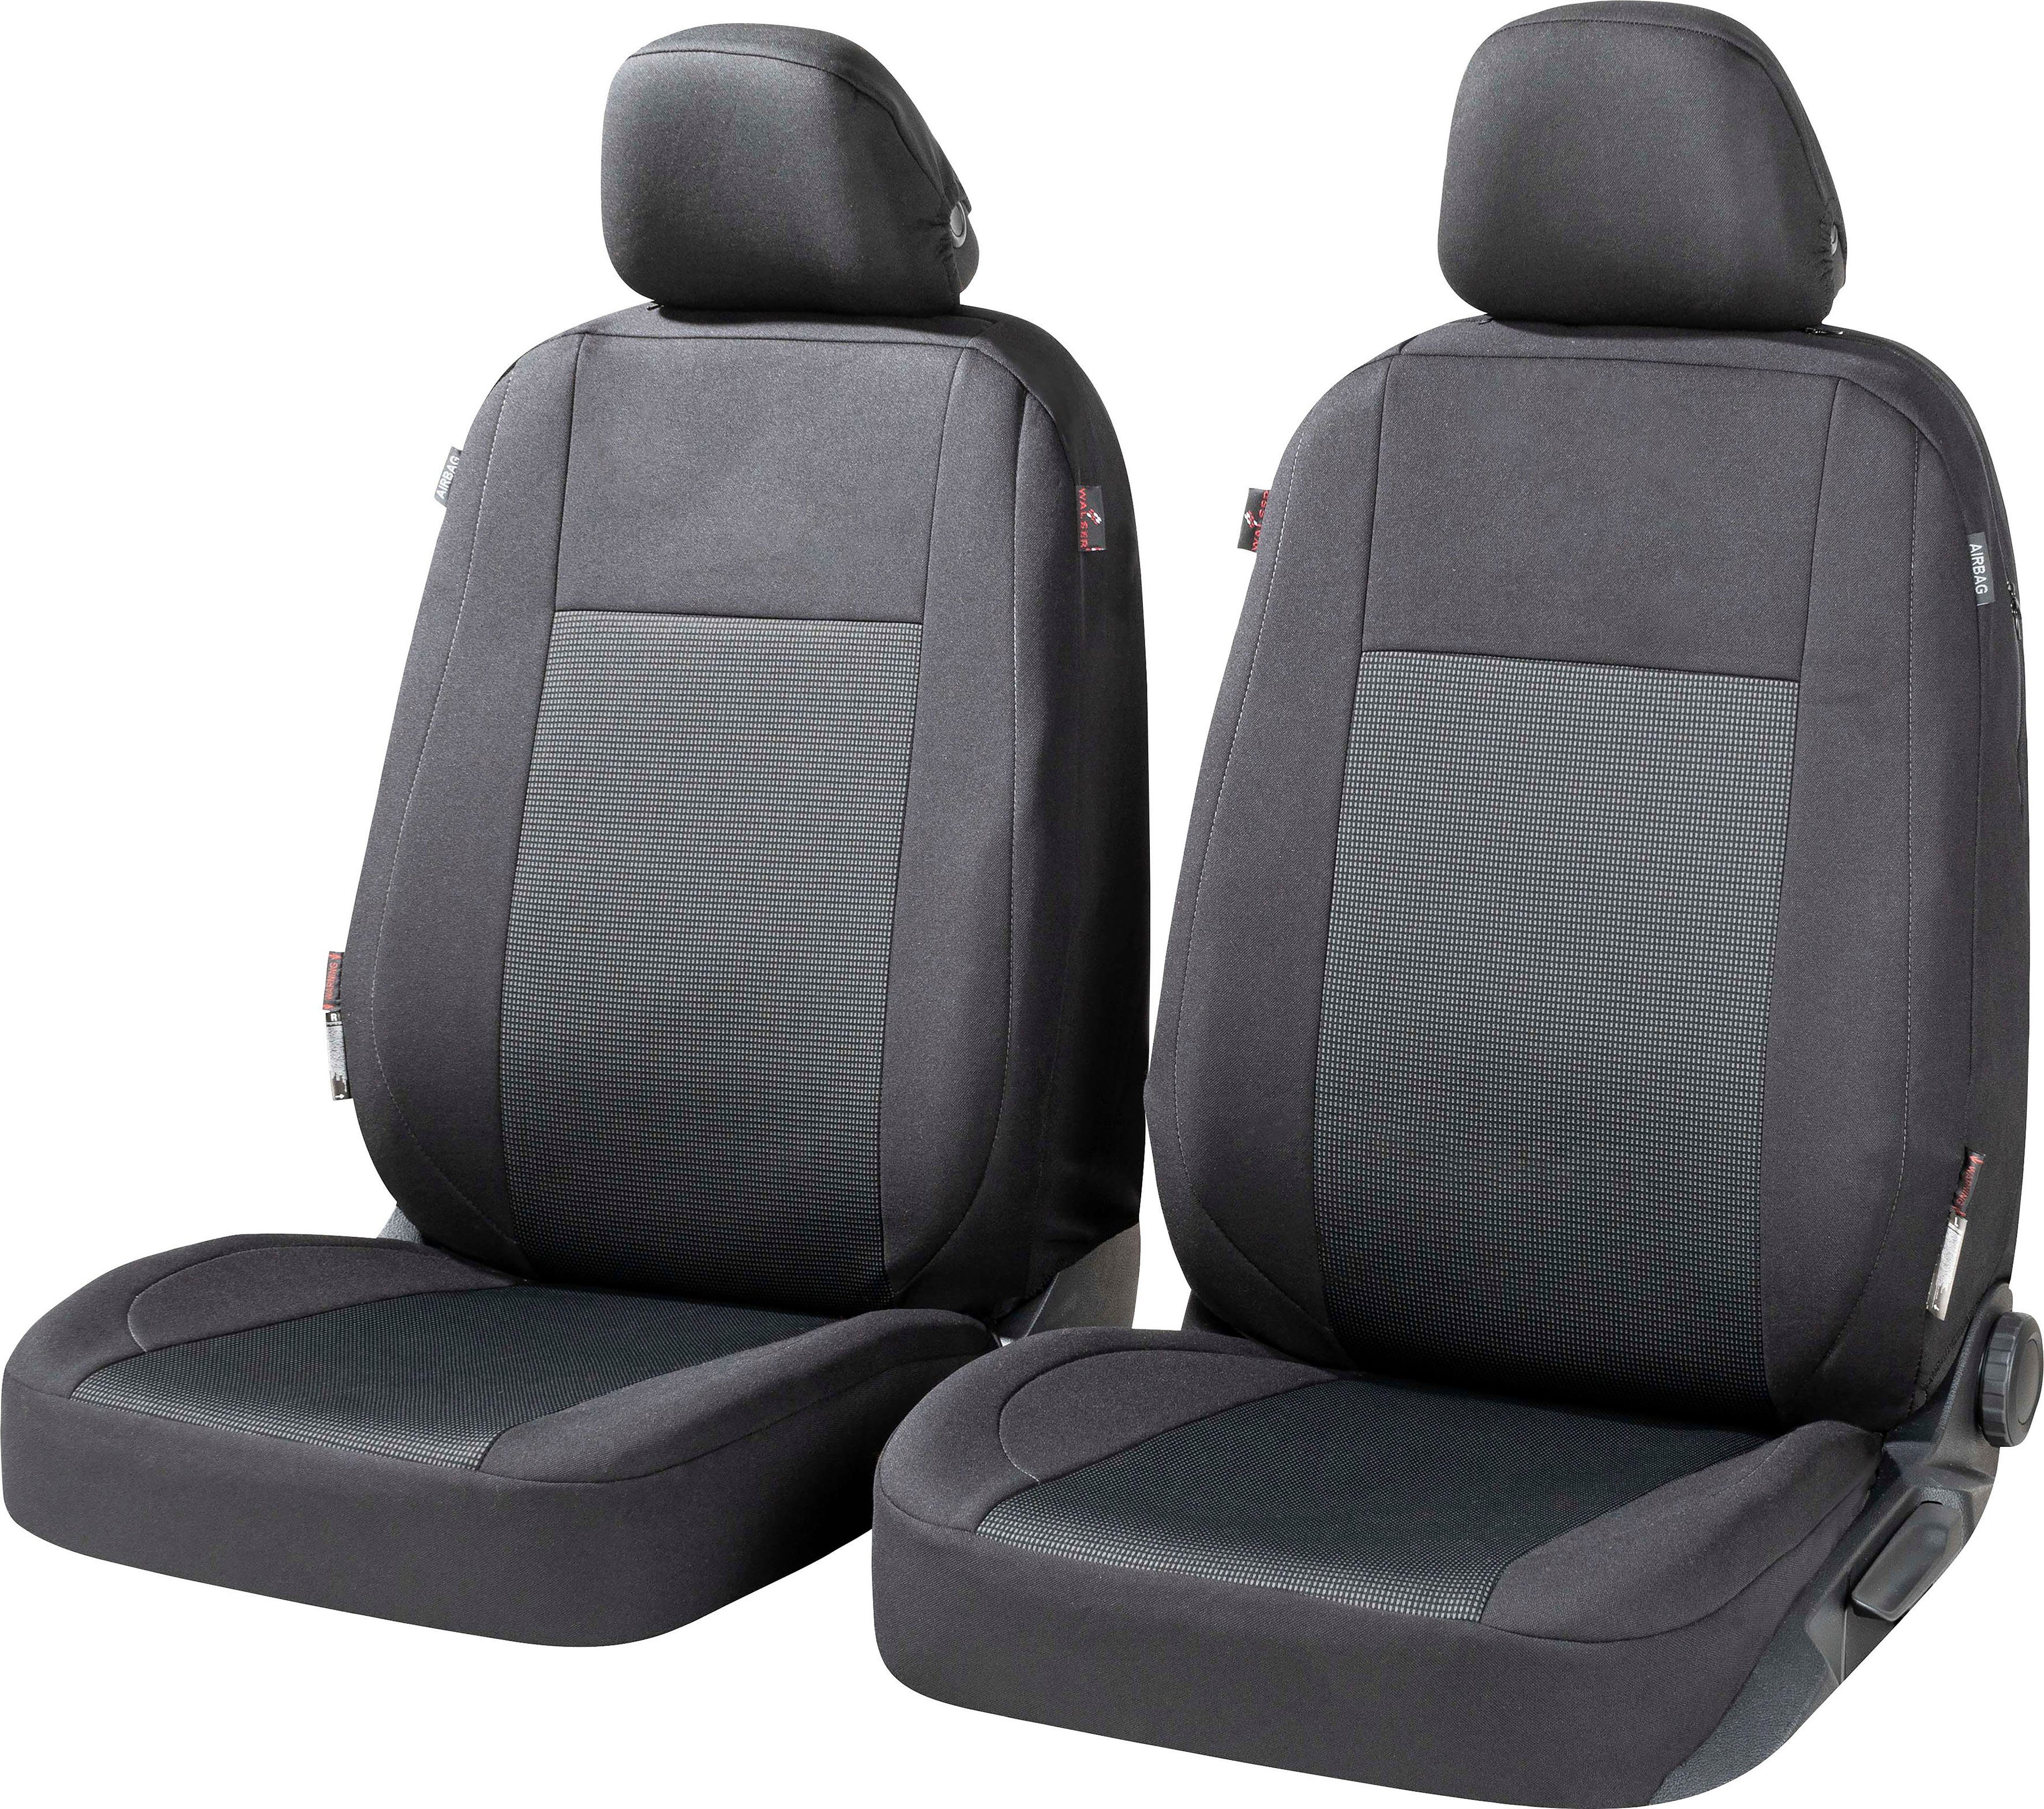 Royal Class Auto Sitzbezüge kompatibel für VW Amarok in Dark Grau Komplett  Fahrer und Beifahrer mit Rücksitzbank, Autositzbezug Schonbezug Sitzbezug